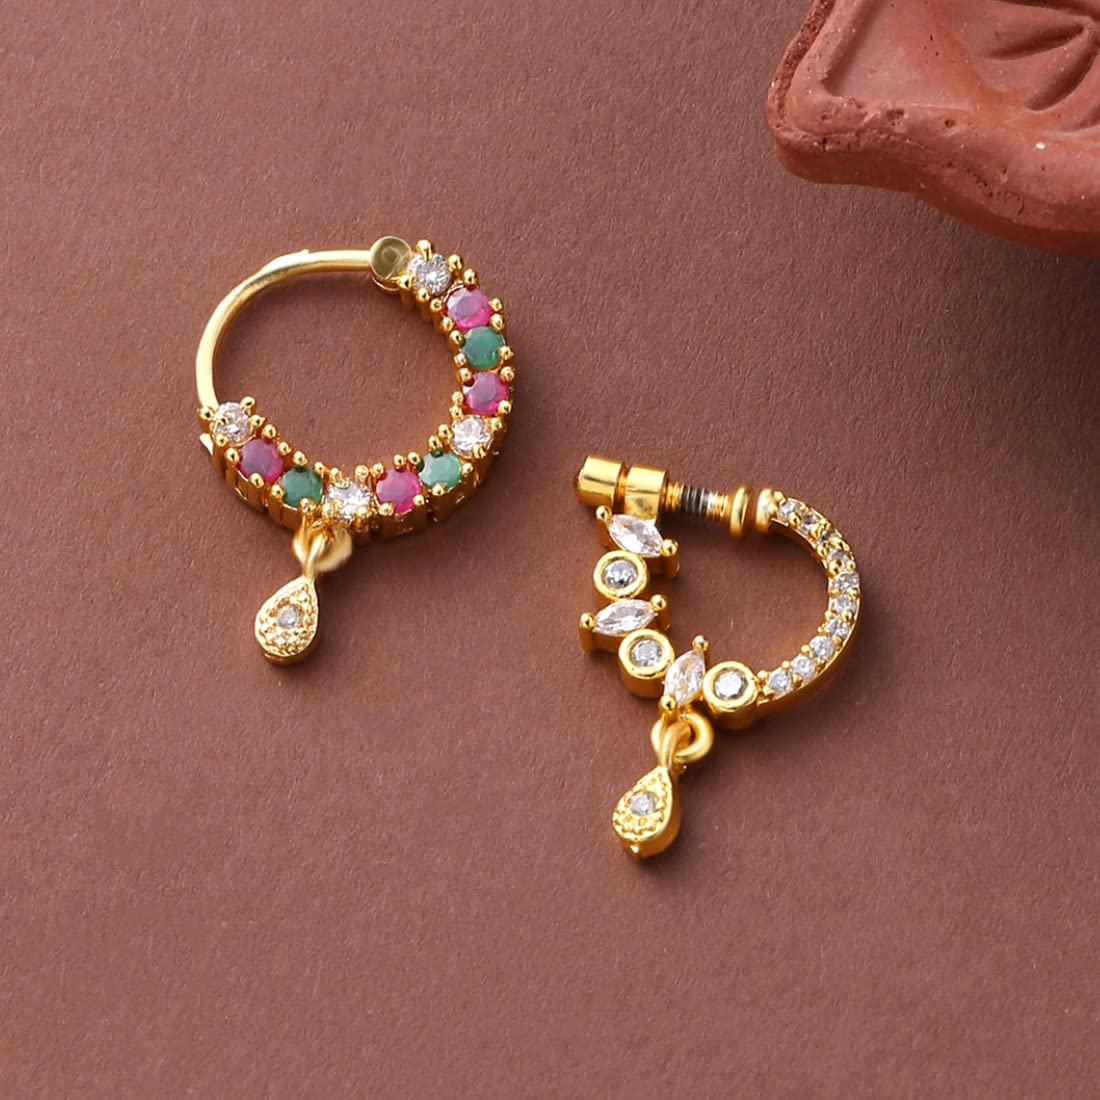 Pin by Kinomi on I ♥ Jewelry | Nose ring jewelry, Nose jewelry, Fancy  jewelry necklace